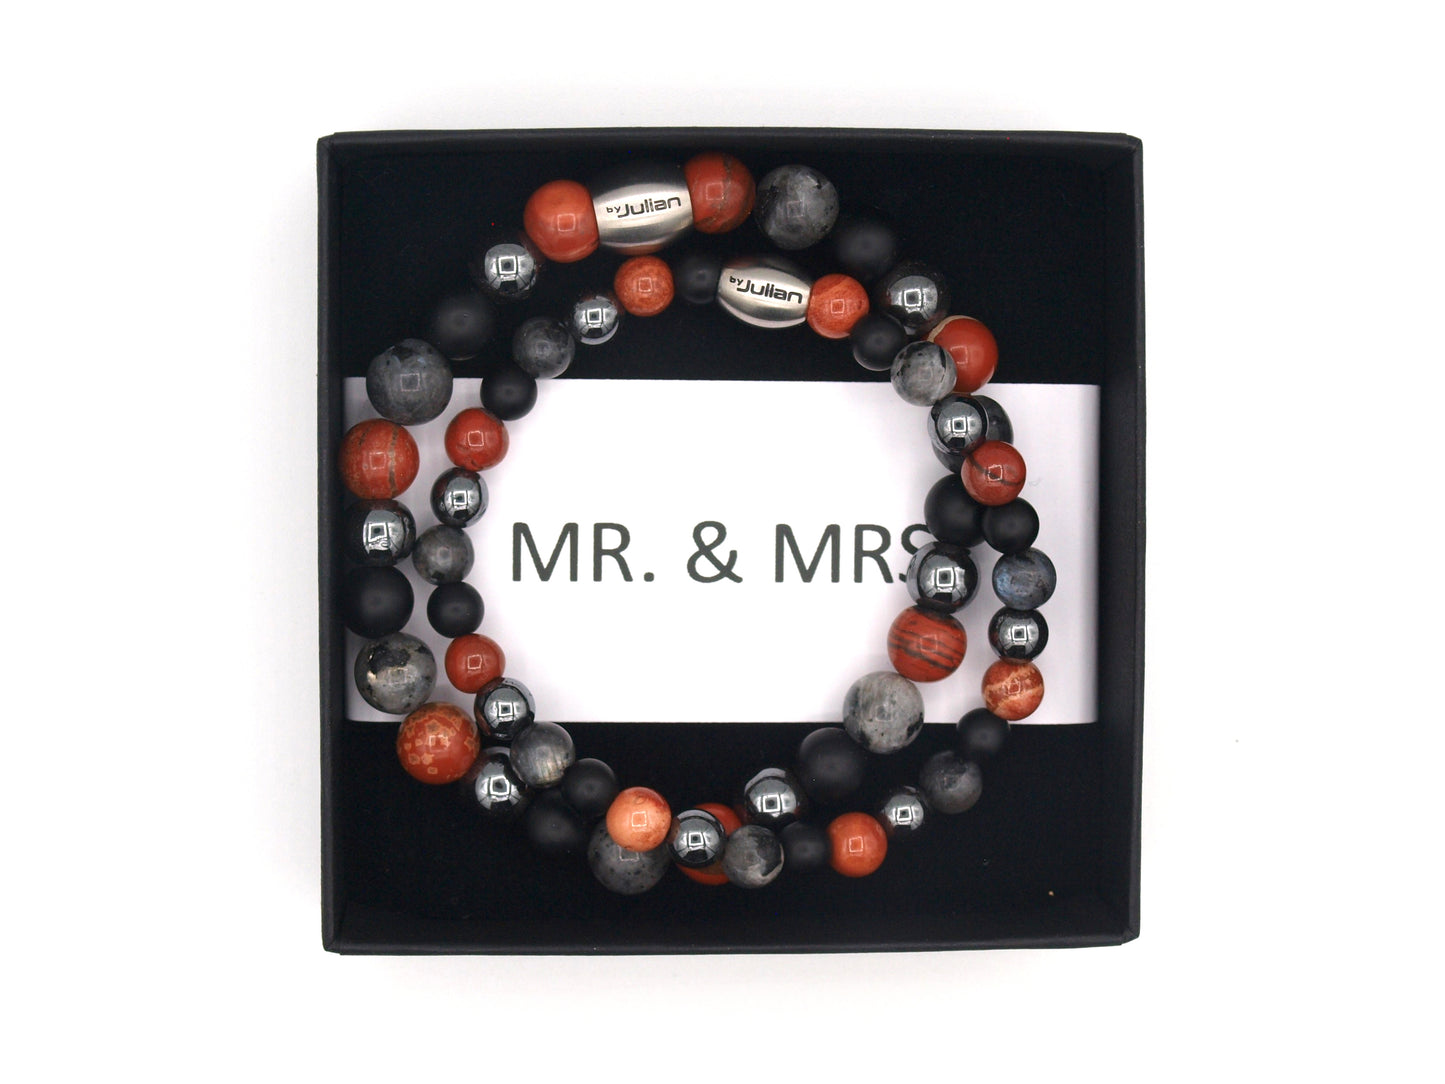 Mr. & MRS. armbandenset rood/zwart